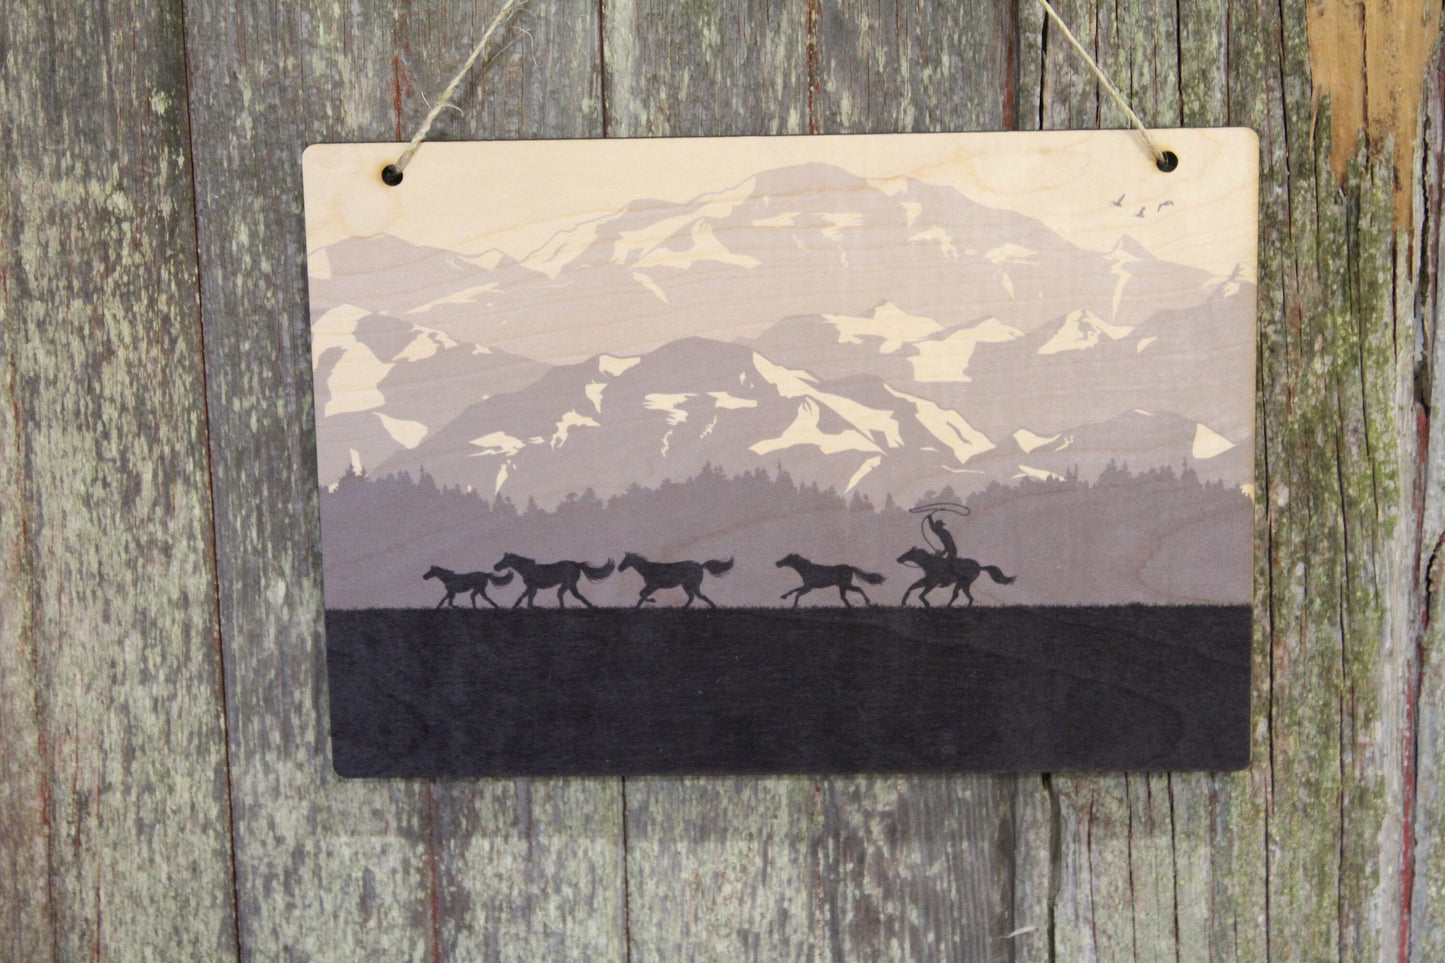 Wild Horses Running Mountain Range Snow Cap Silhouette Grays Monotone Western Equestrian Rustic Wooden Wall Decor Art Wood Print